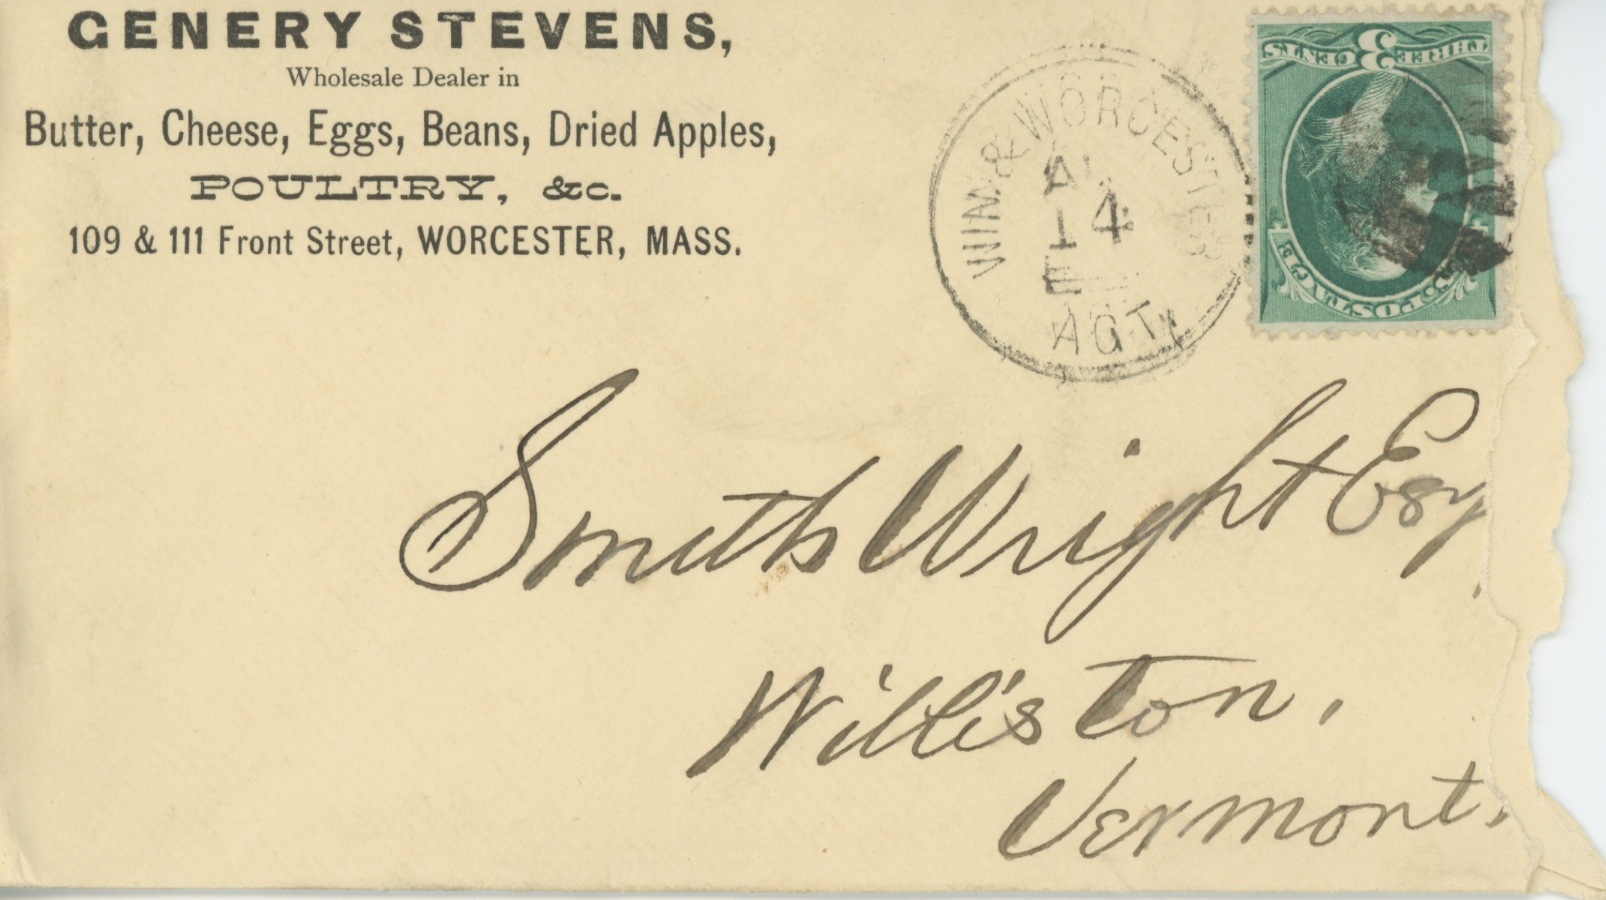 colinrussell-1900-generystevens-envelope.jpeg